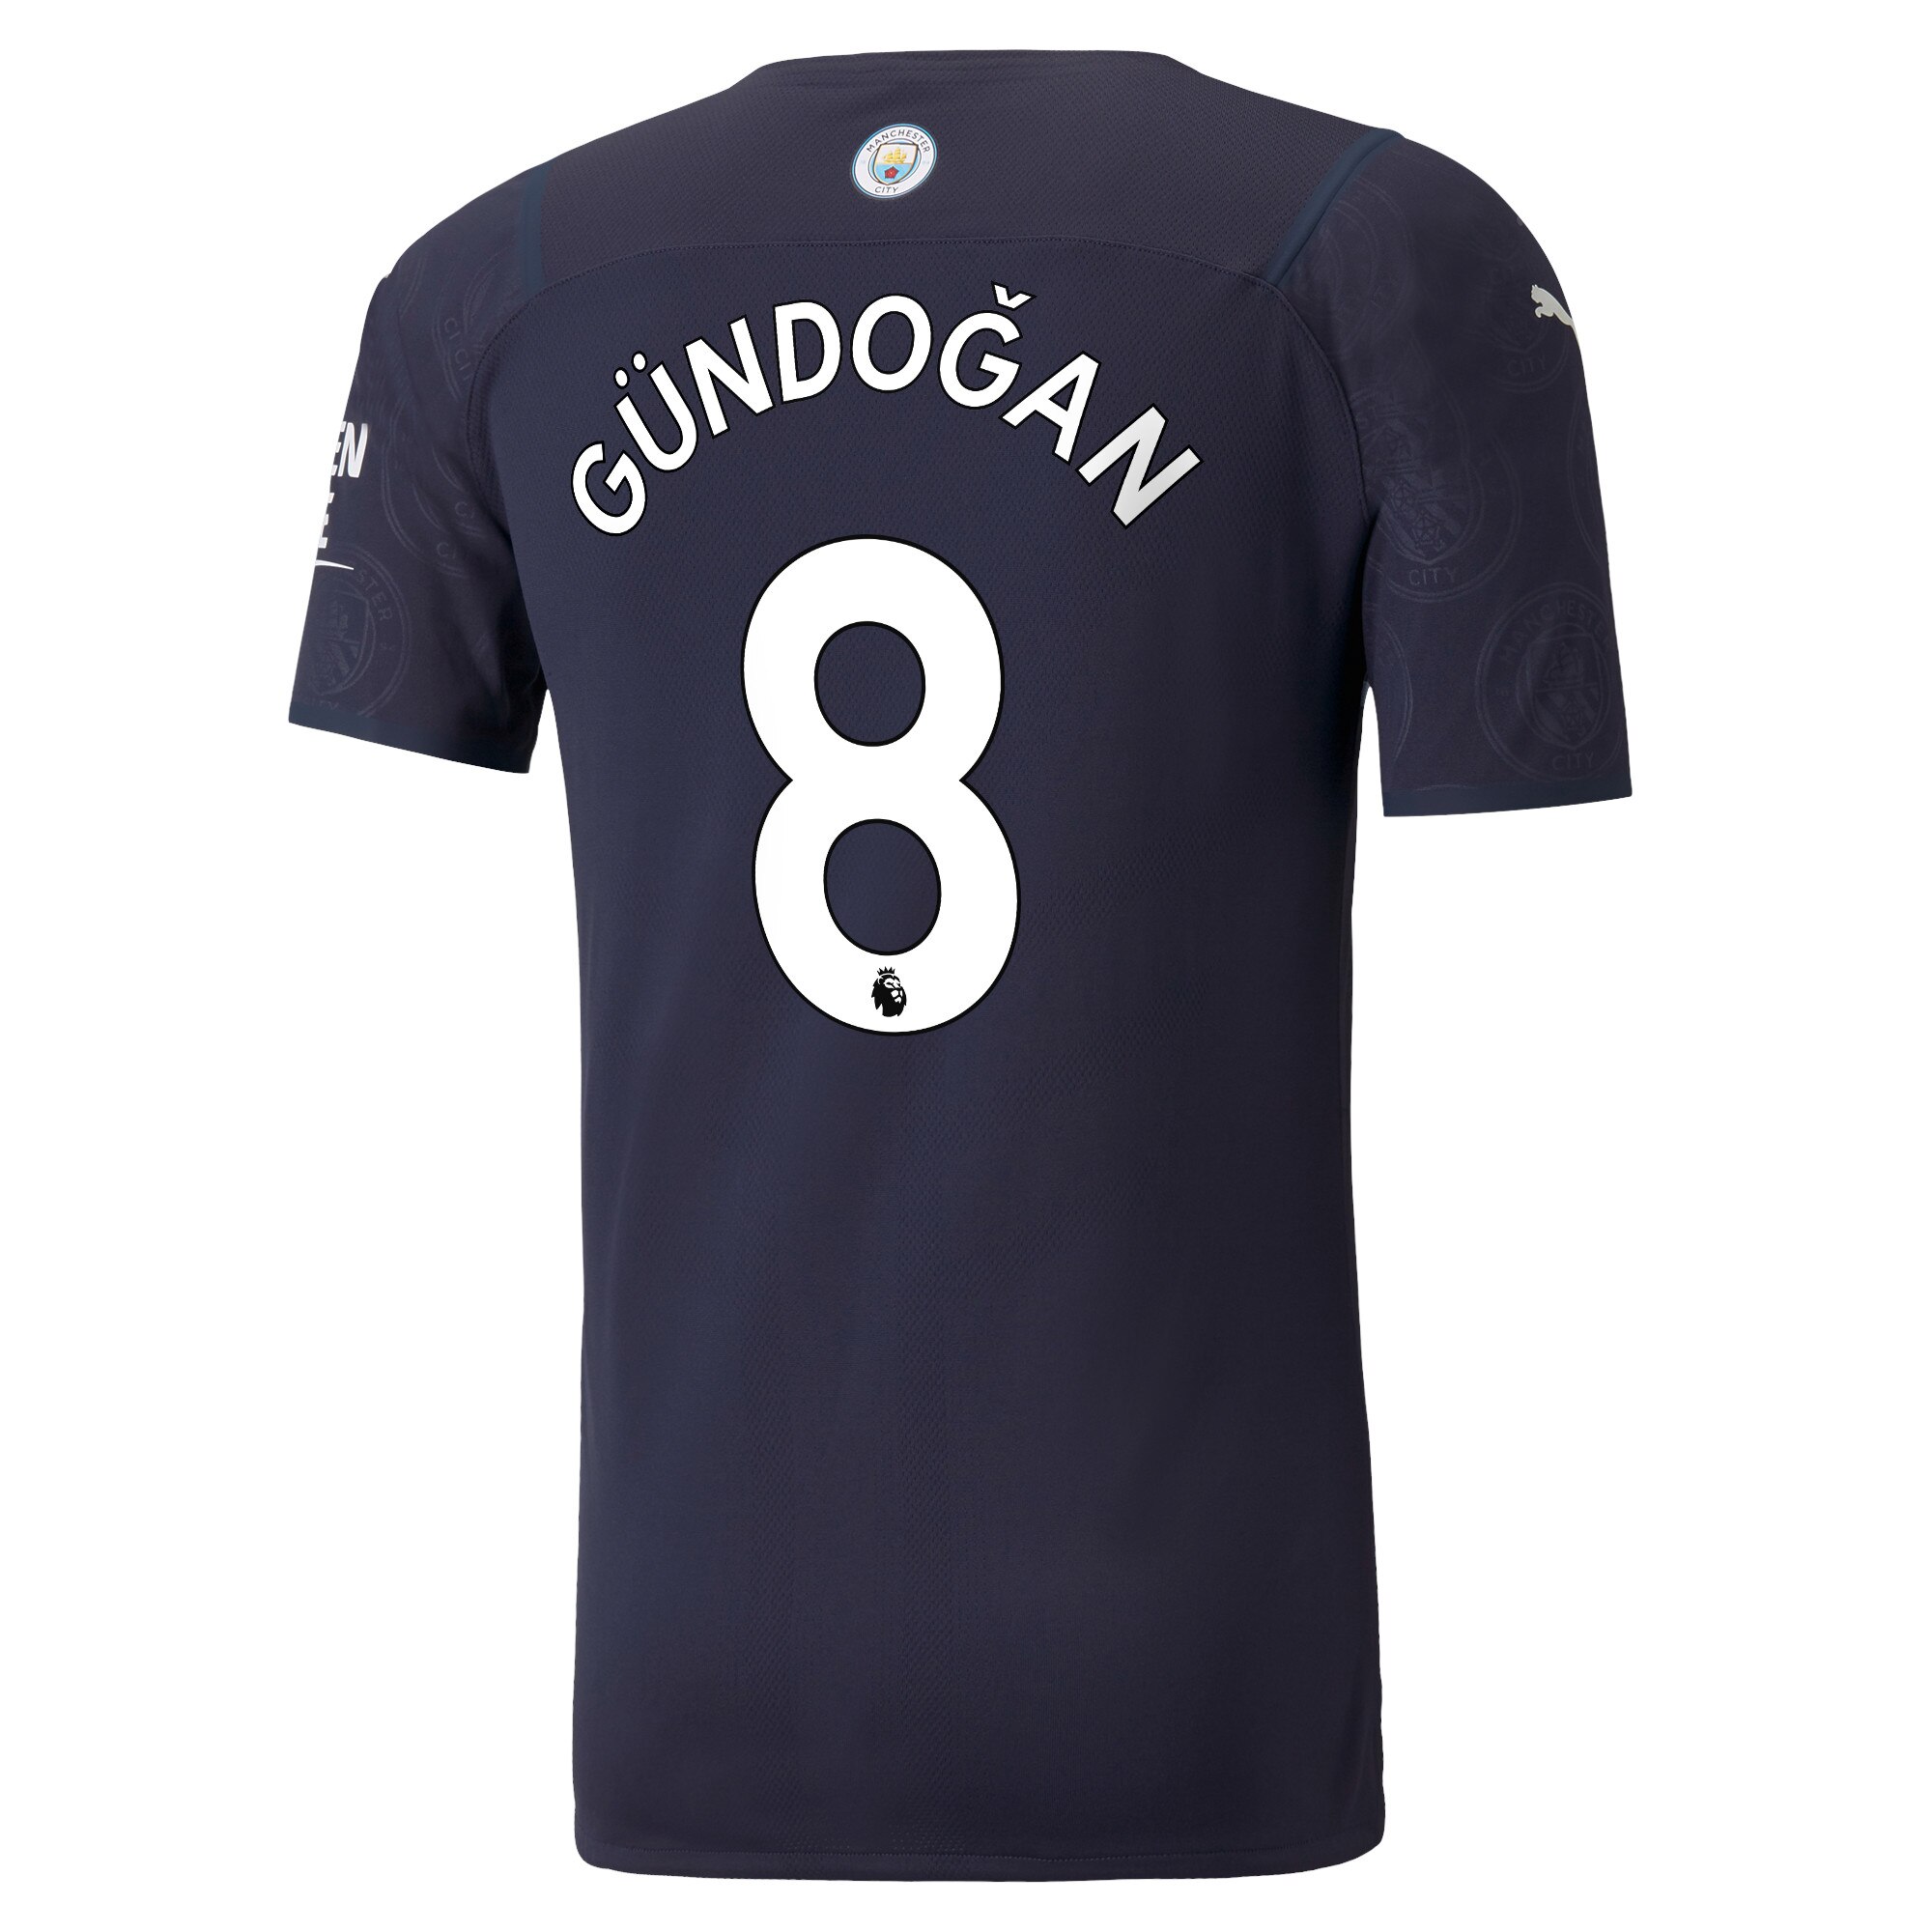 Manchester City Authentic Third Shirt 2021-22 with Gündogan 8 printing